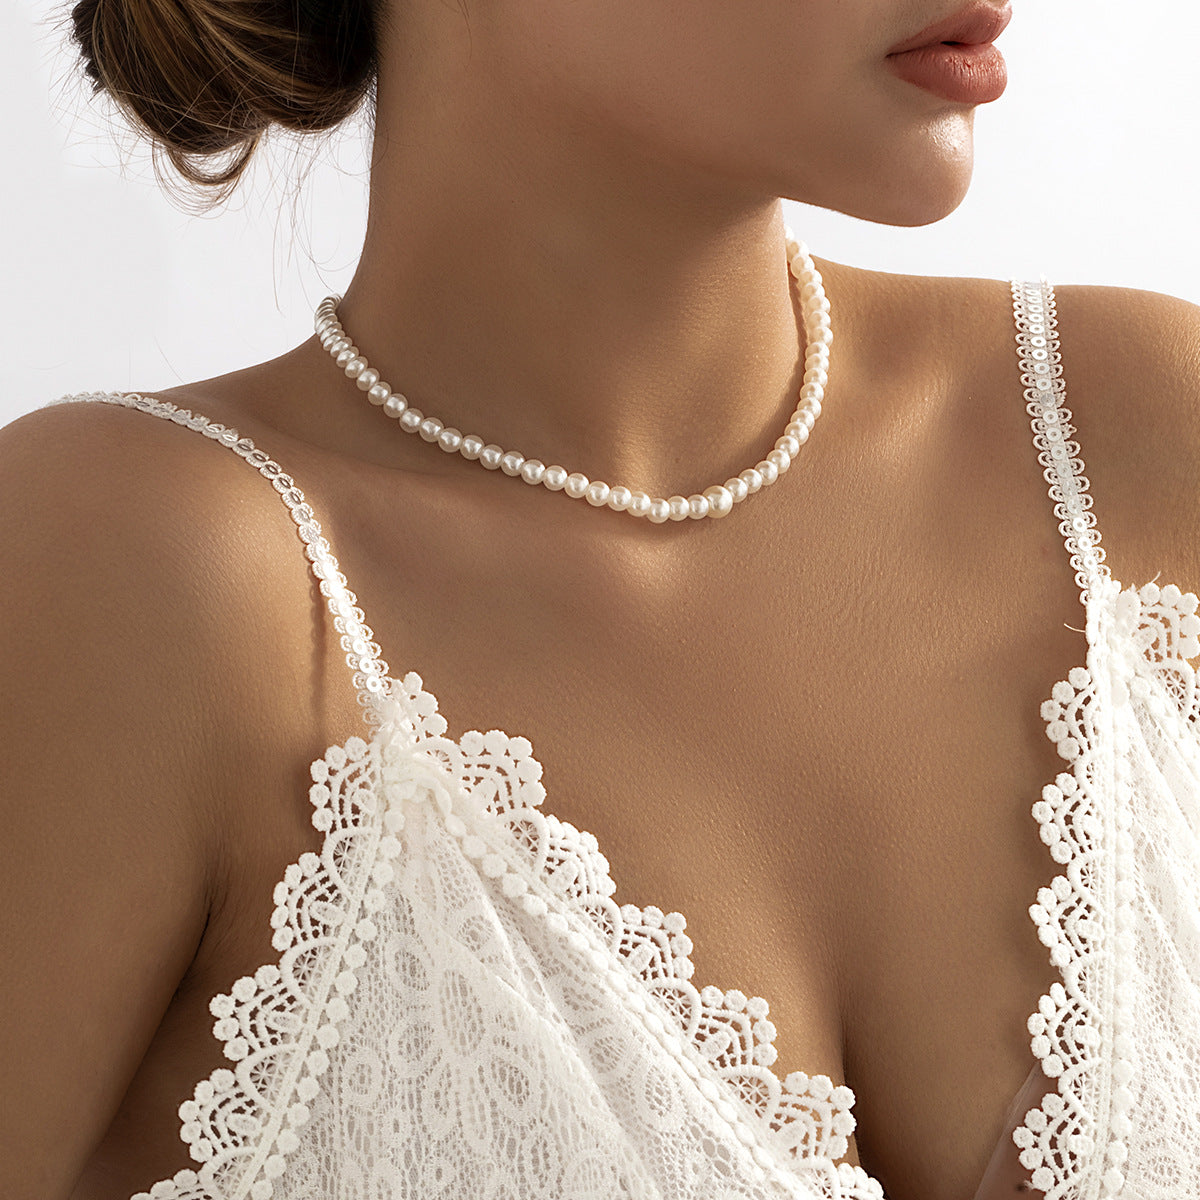 1 Piece Women's Sexy Imitation Pearl Pendant Tassel Back Chain Body Chain